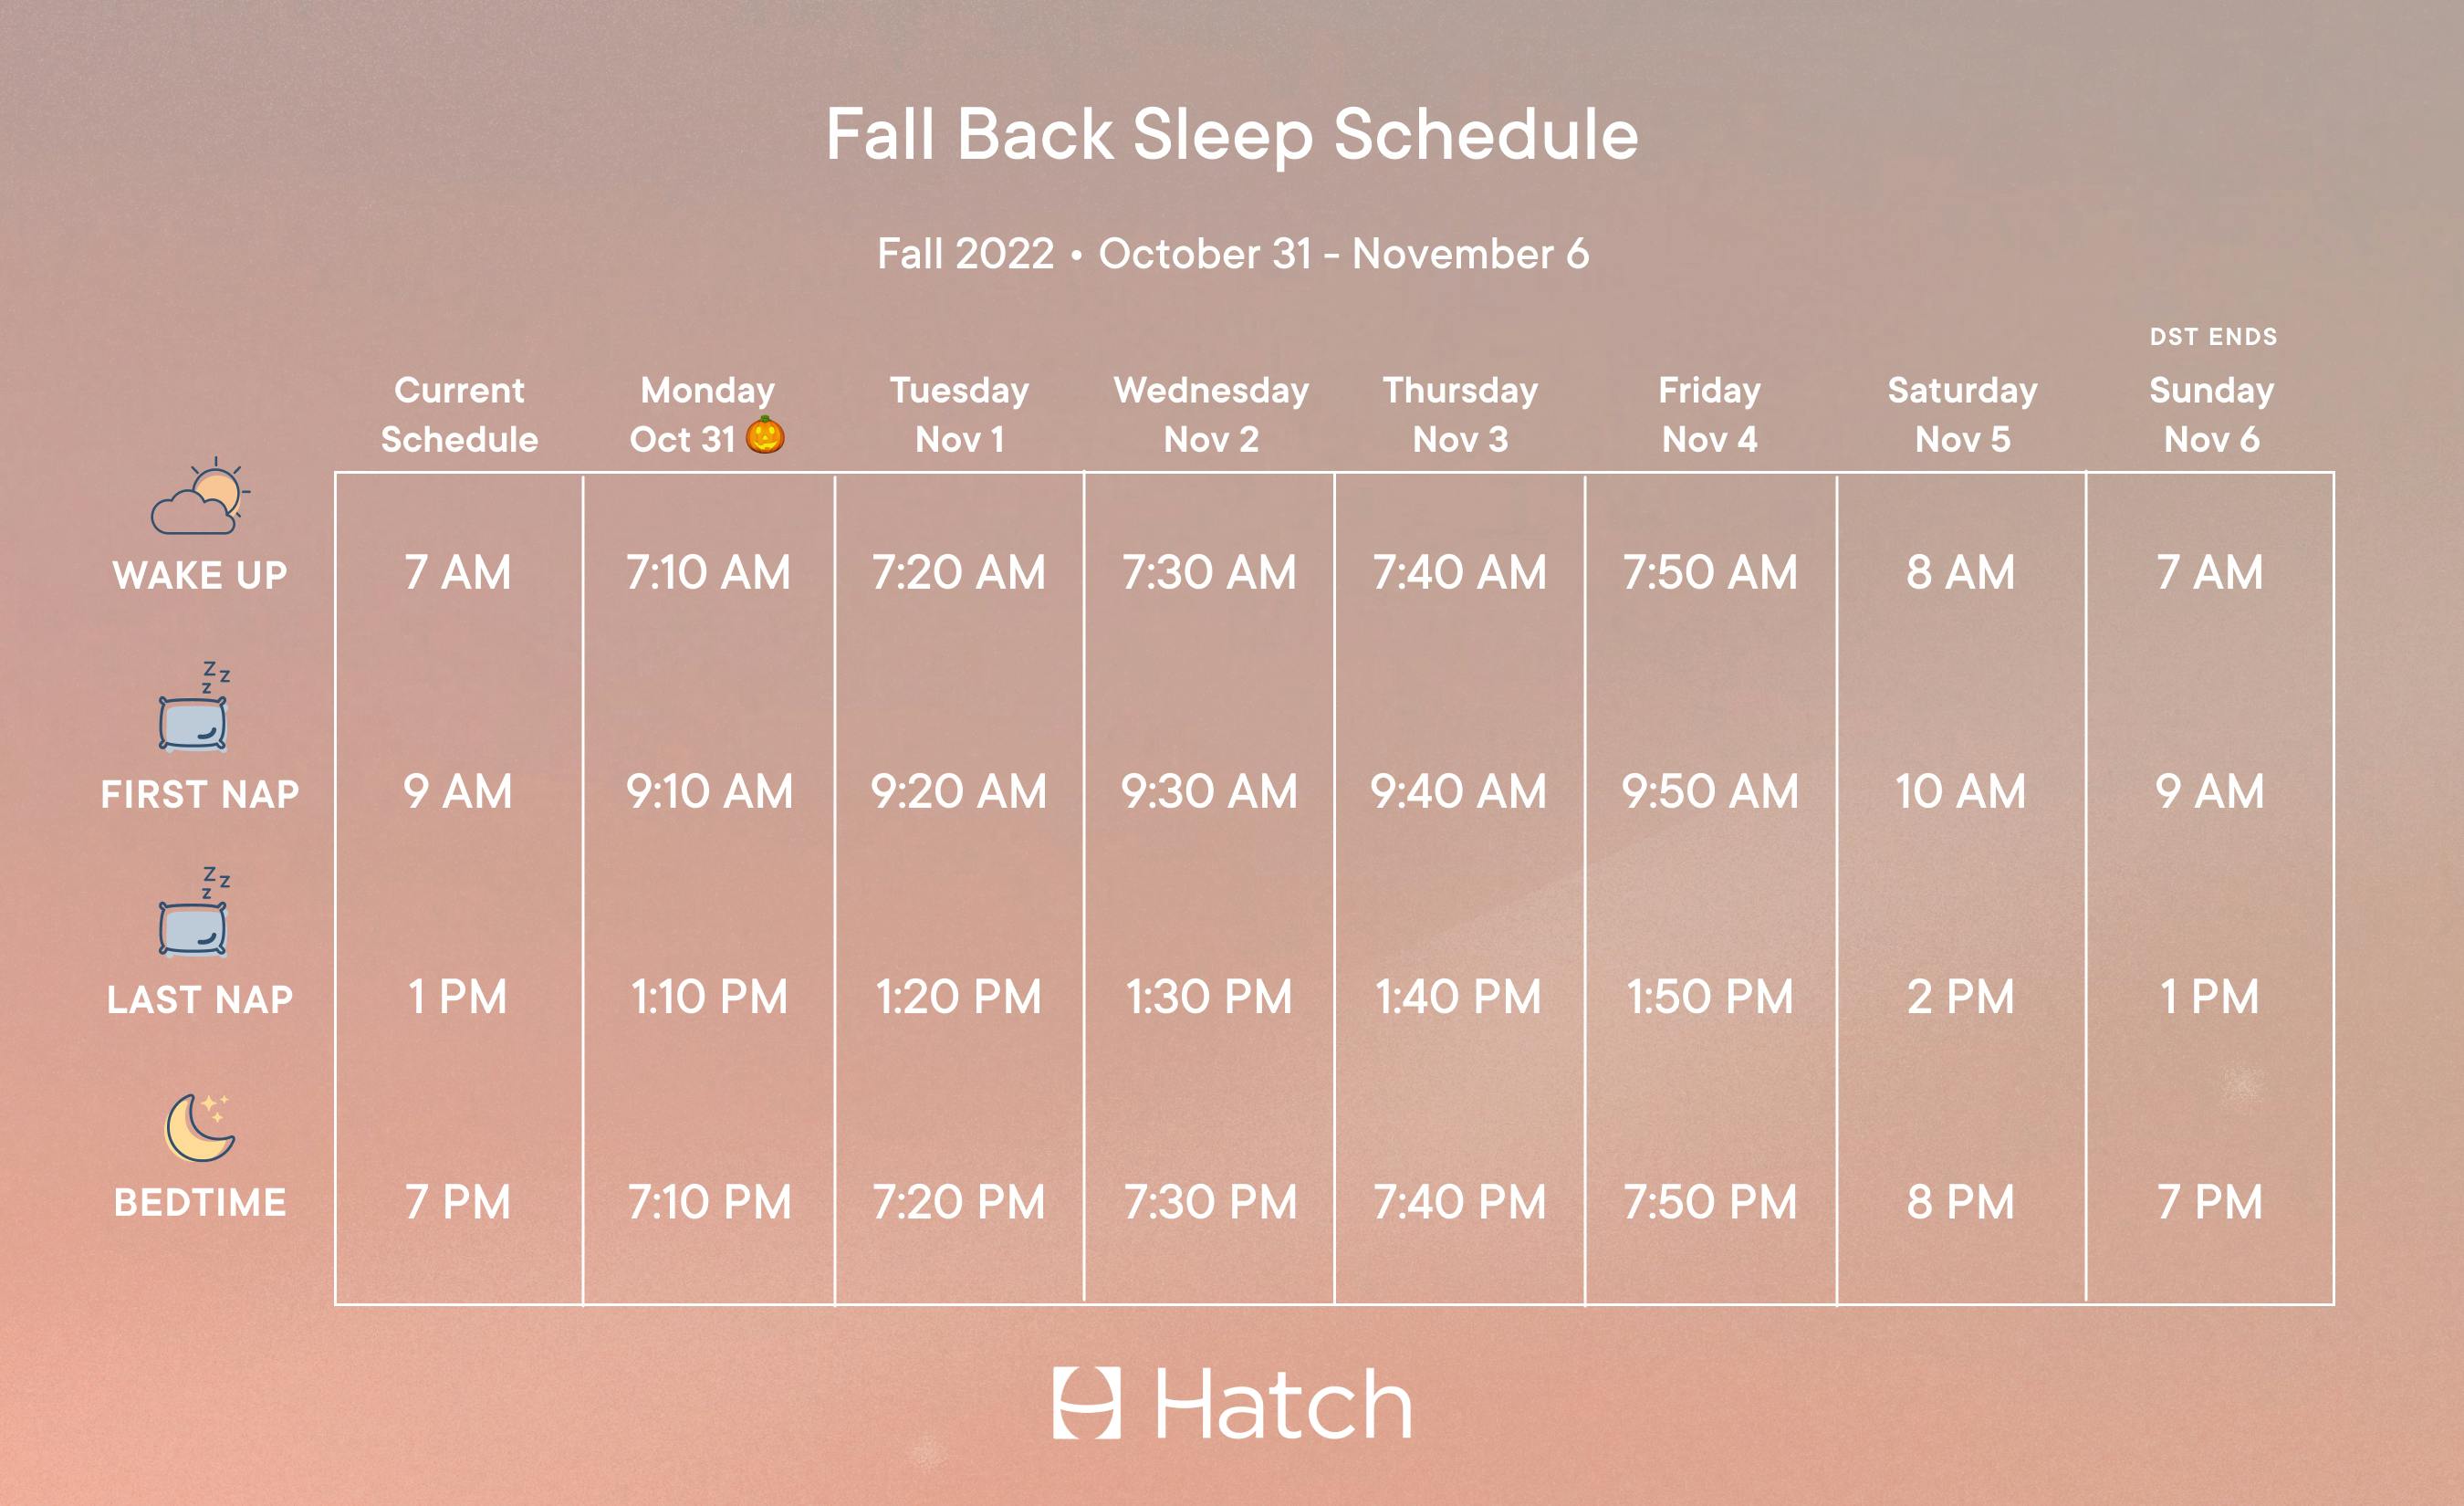 Fall Back Sleep Schedule 2022